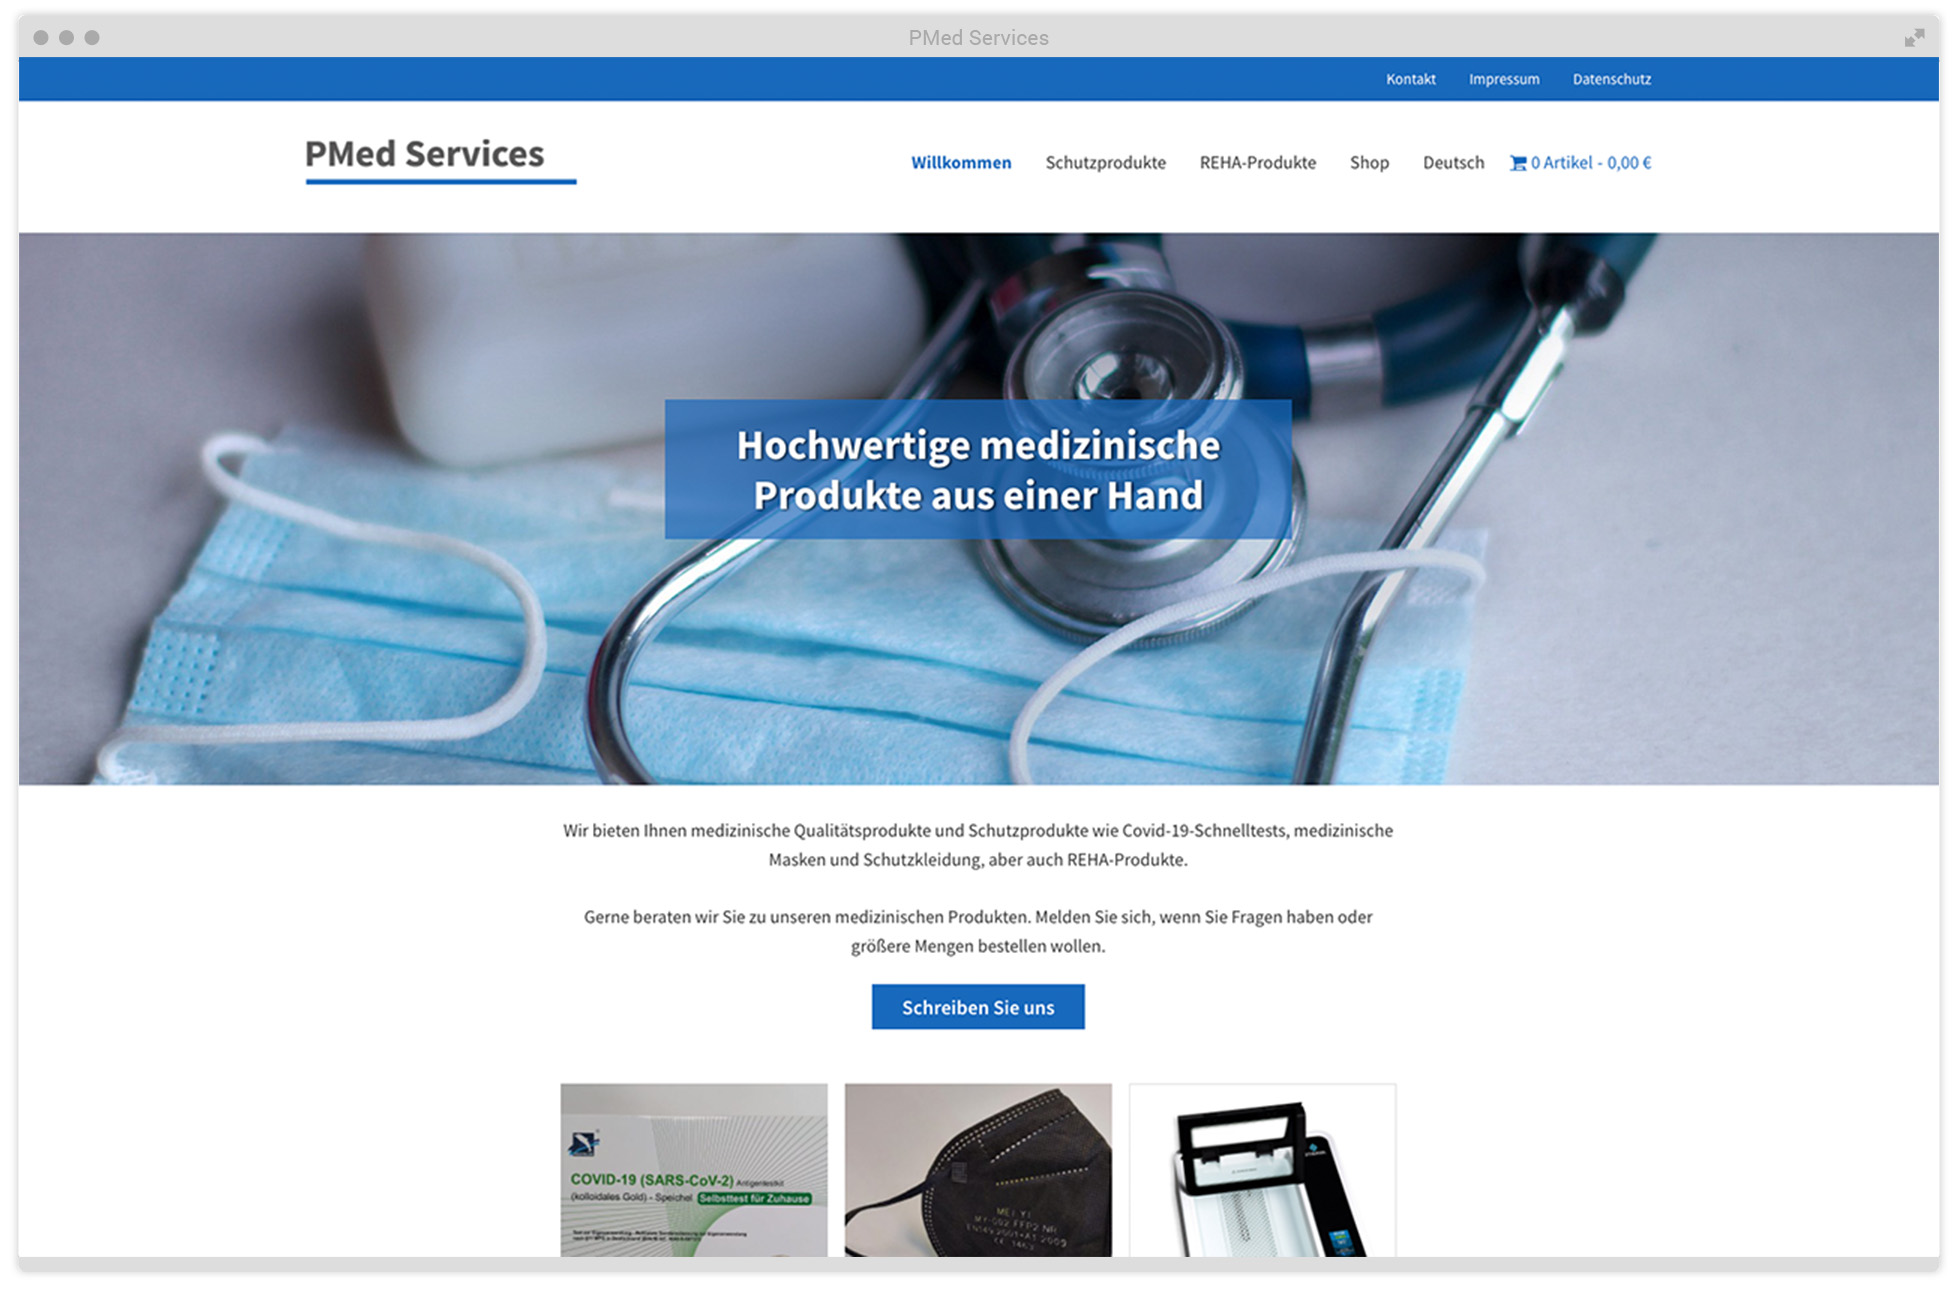 Kuki Design Corona Webshop Medizinische Produkte PMed Services